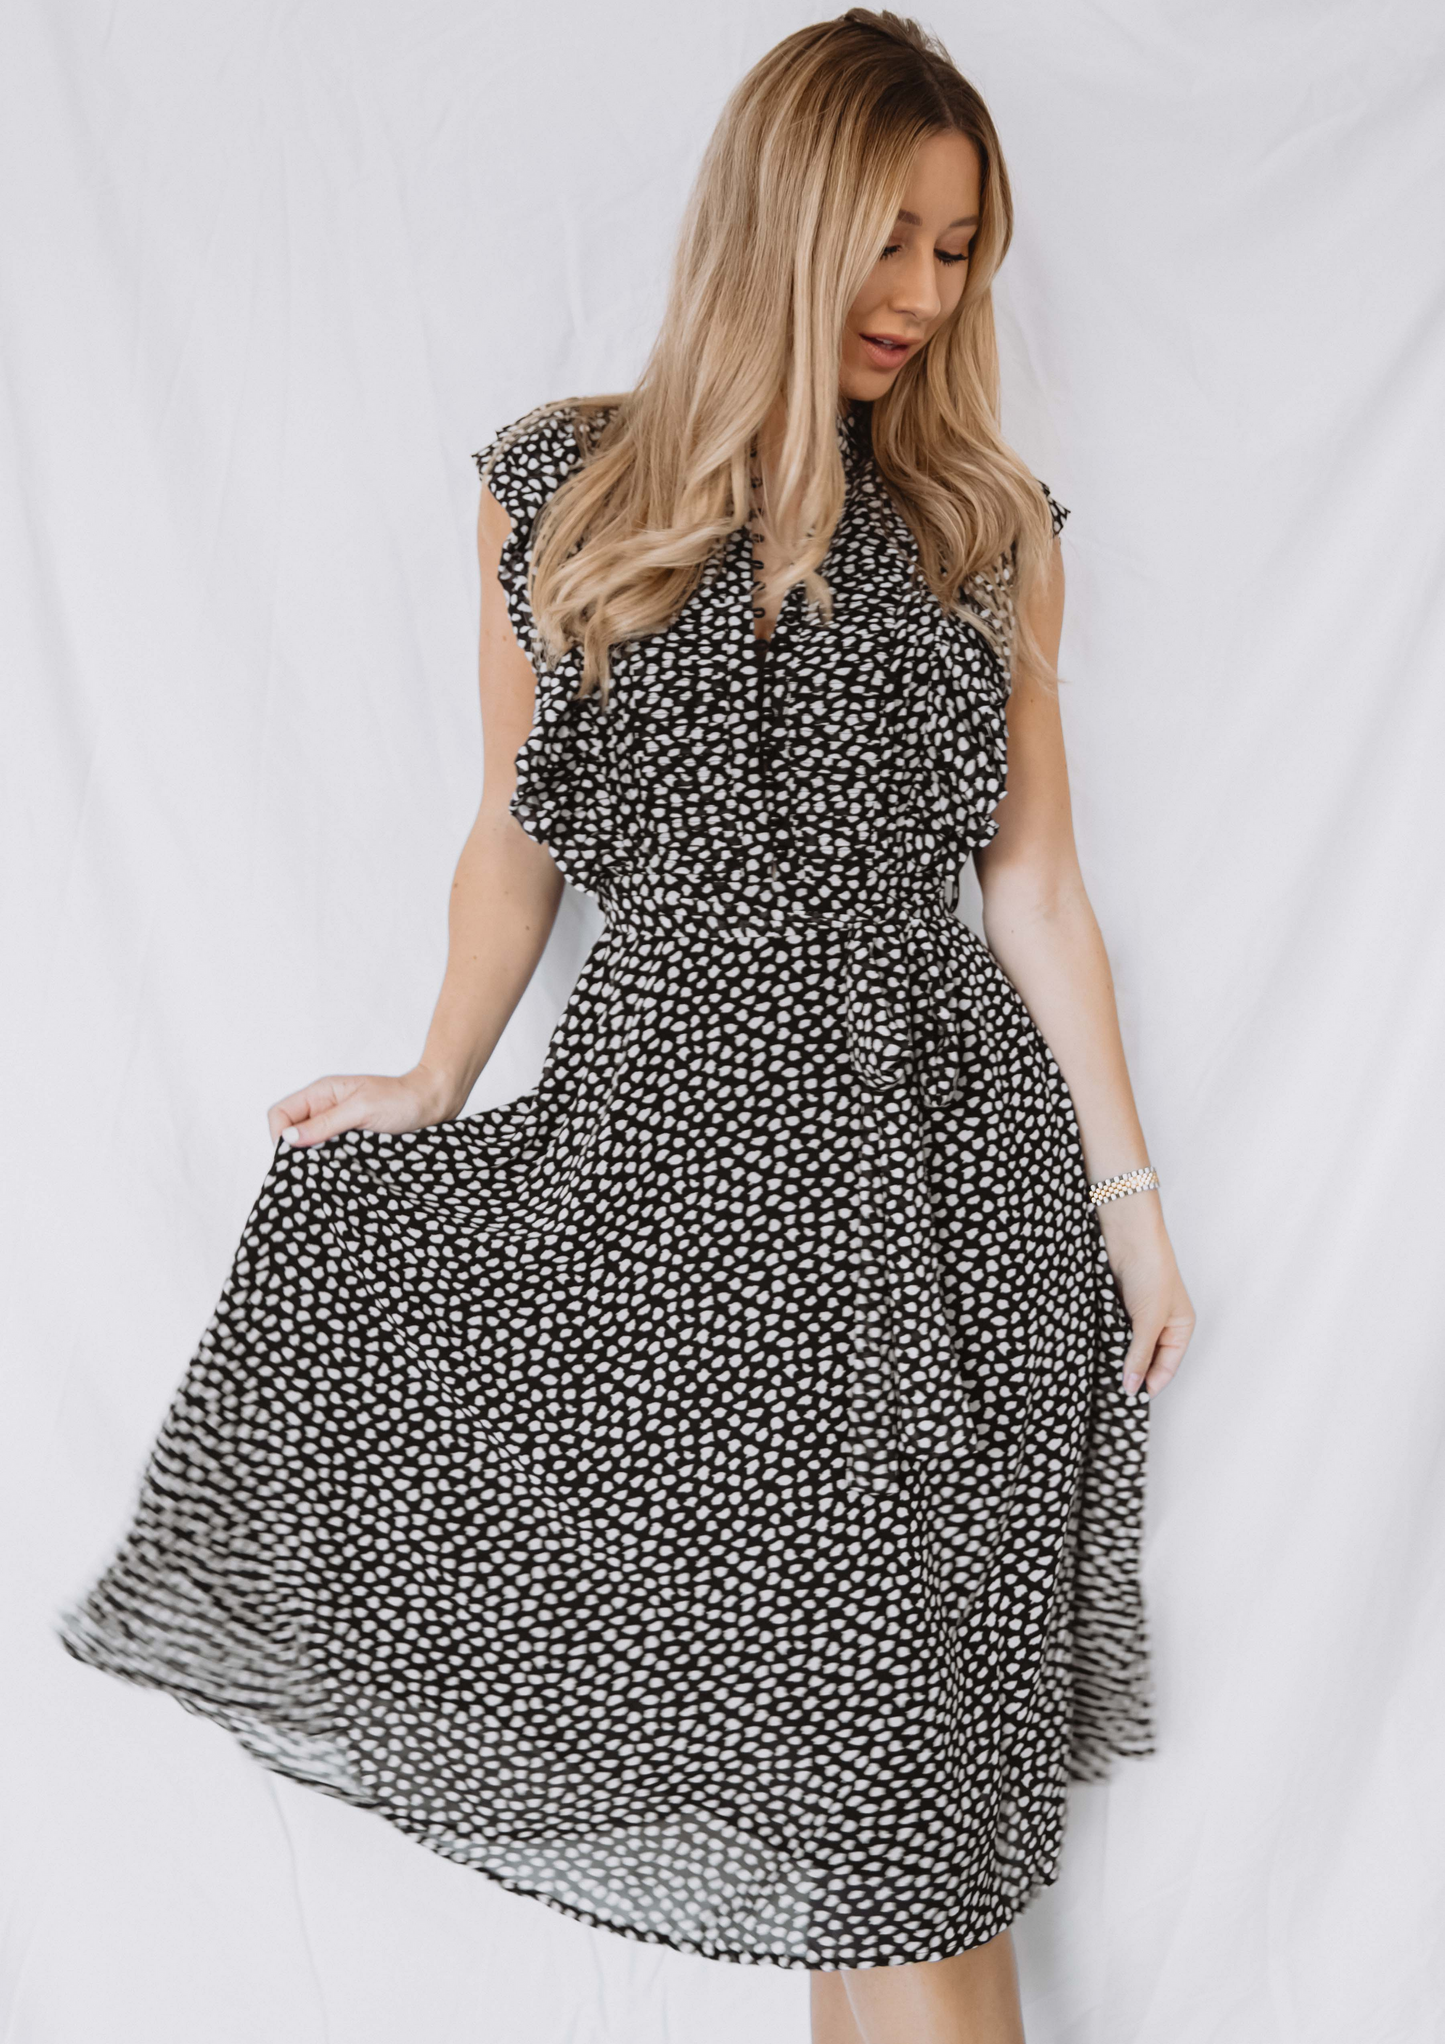 The Leopard Ruffle Dress